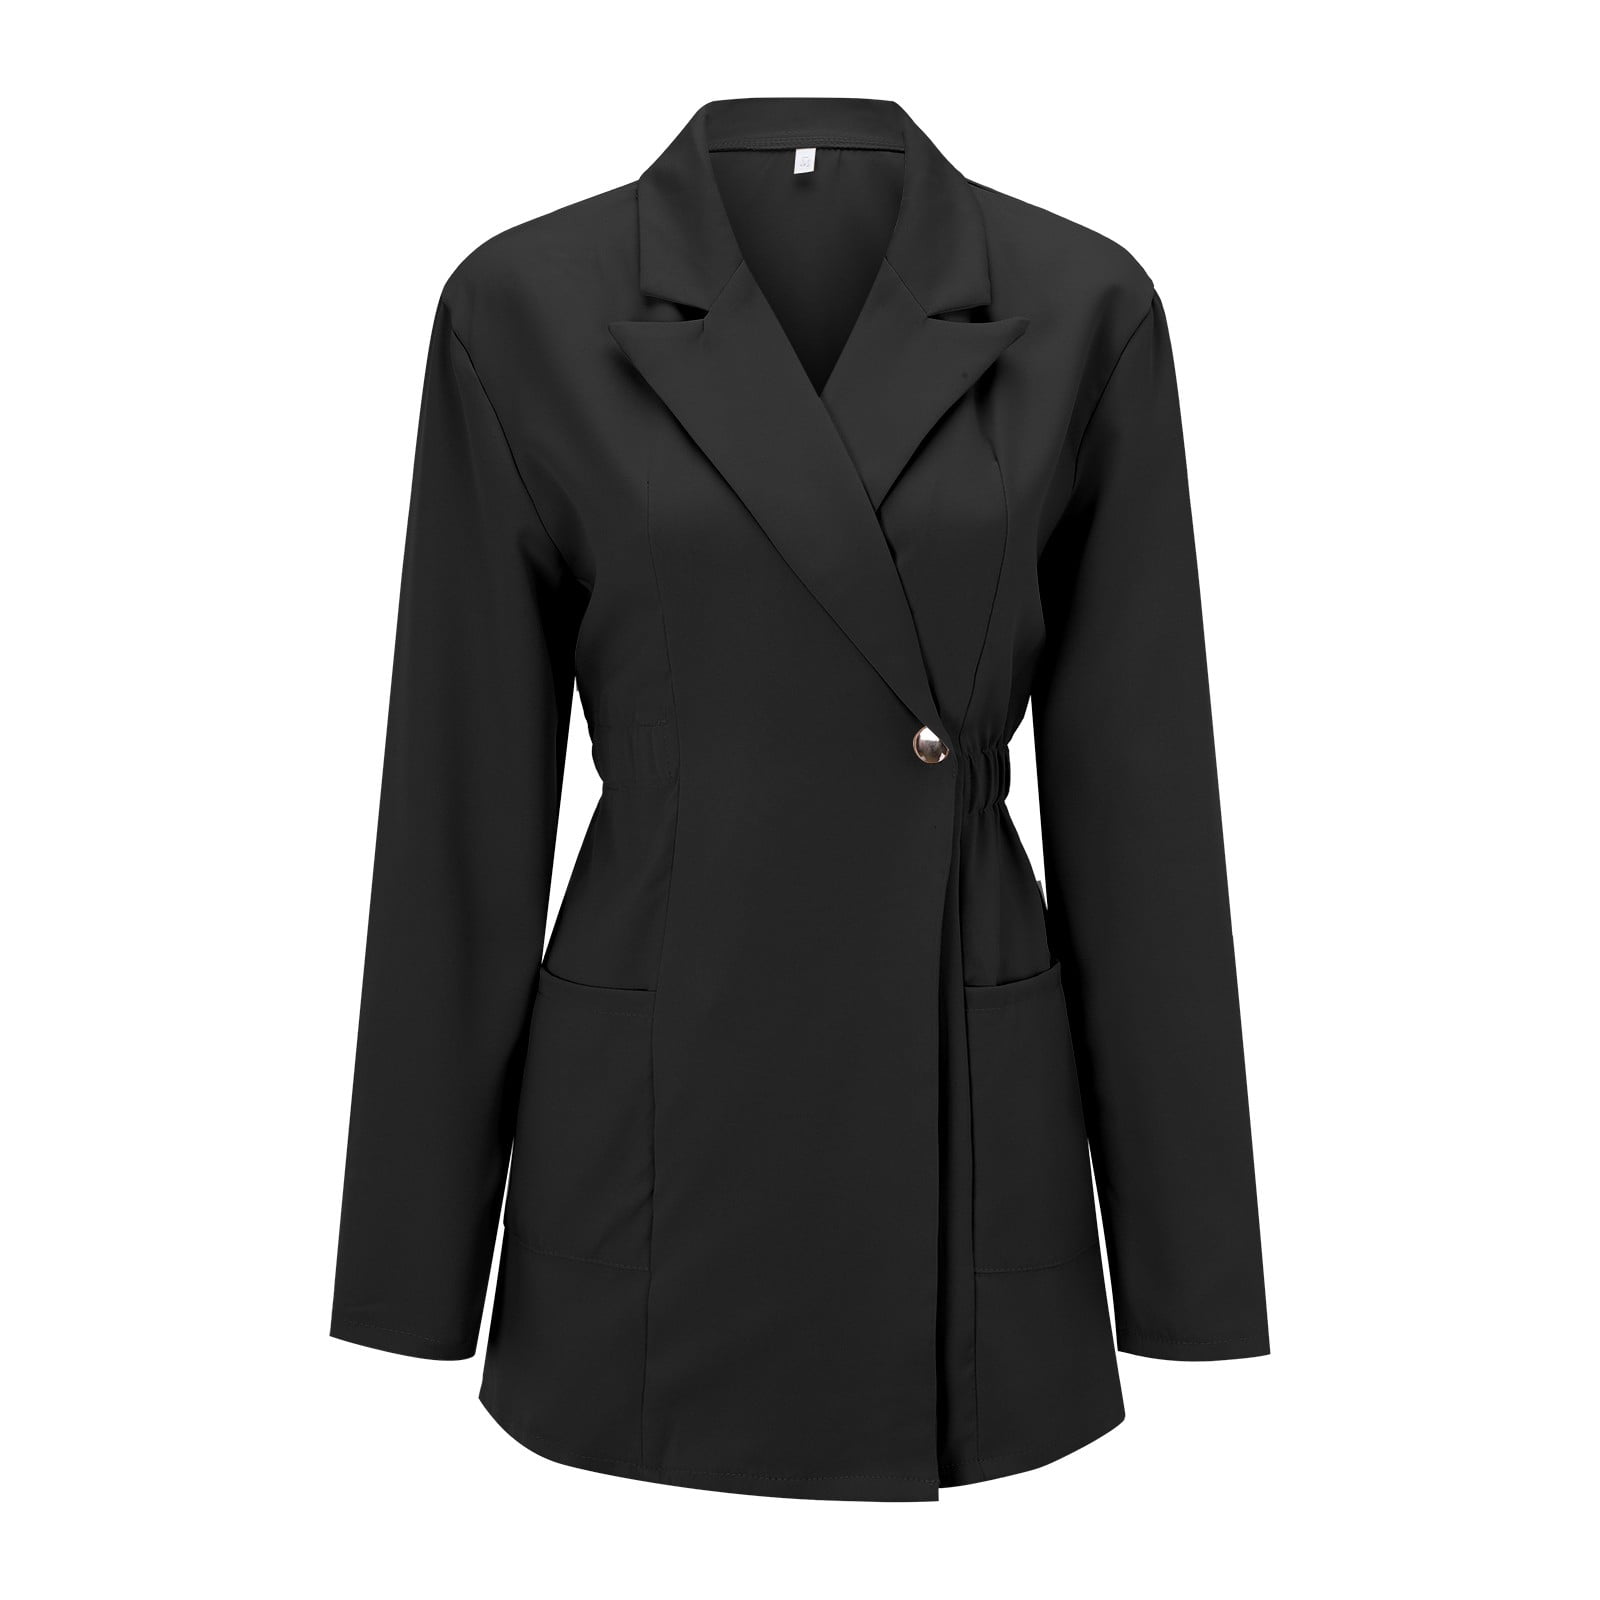 HSMQHJWE Suit Jacket For Women Women Coat With Inside Women'S Autumn And  Winter Solid Color Lapel Waist Pleat Long Sleeve Blazer Drop Store 